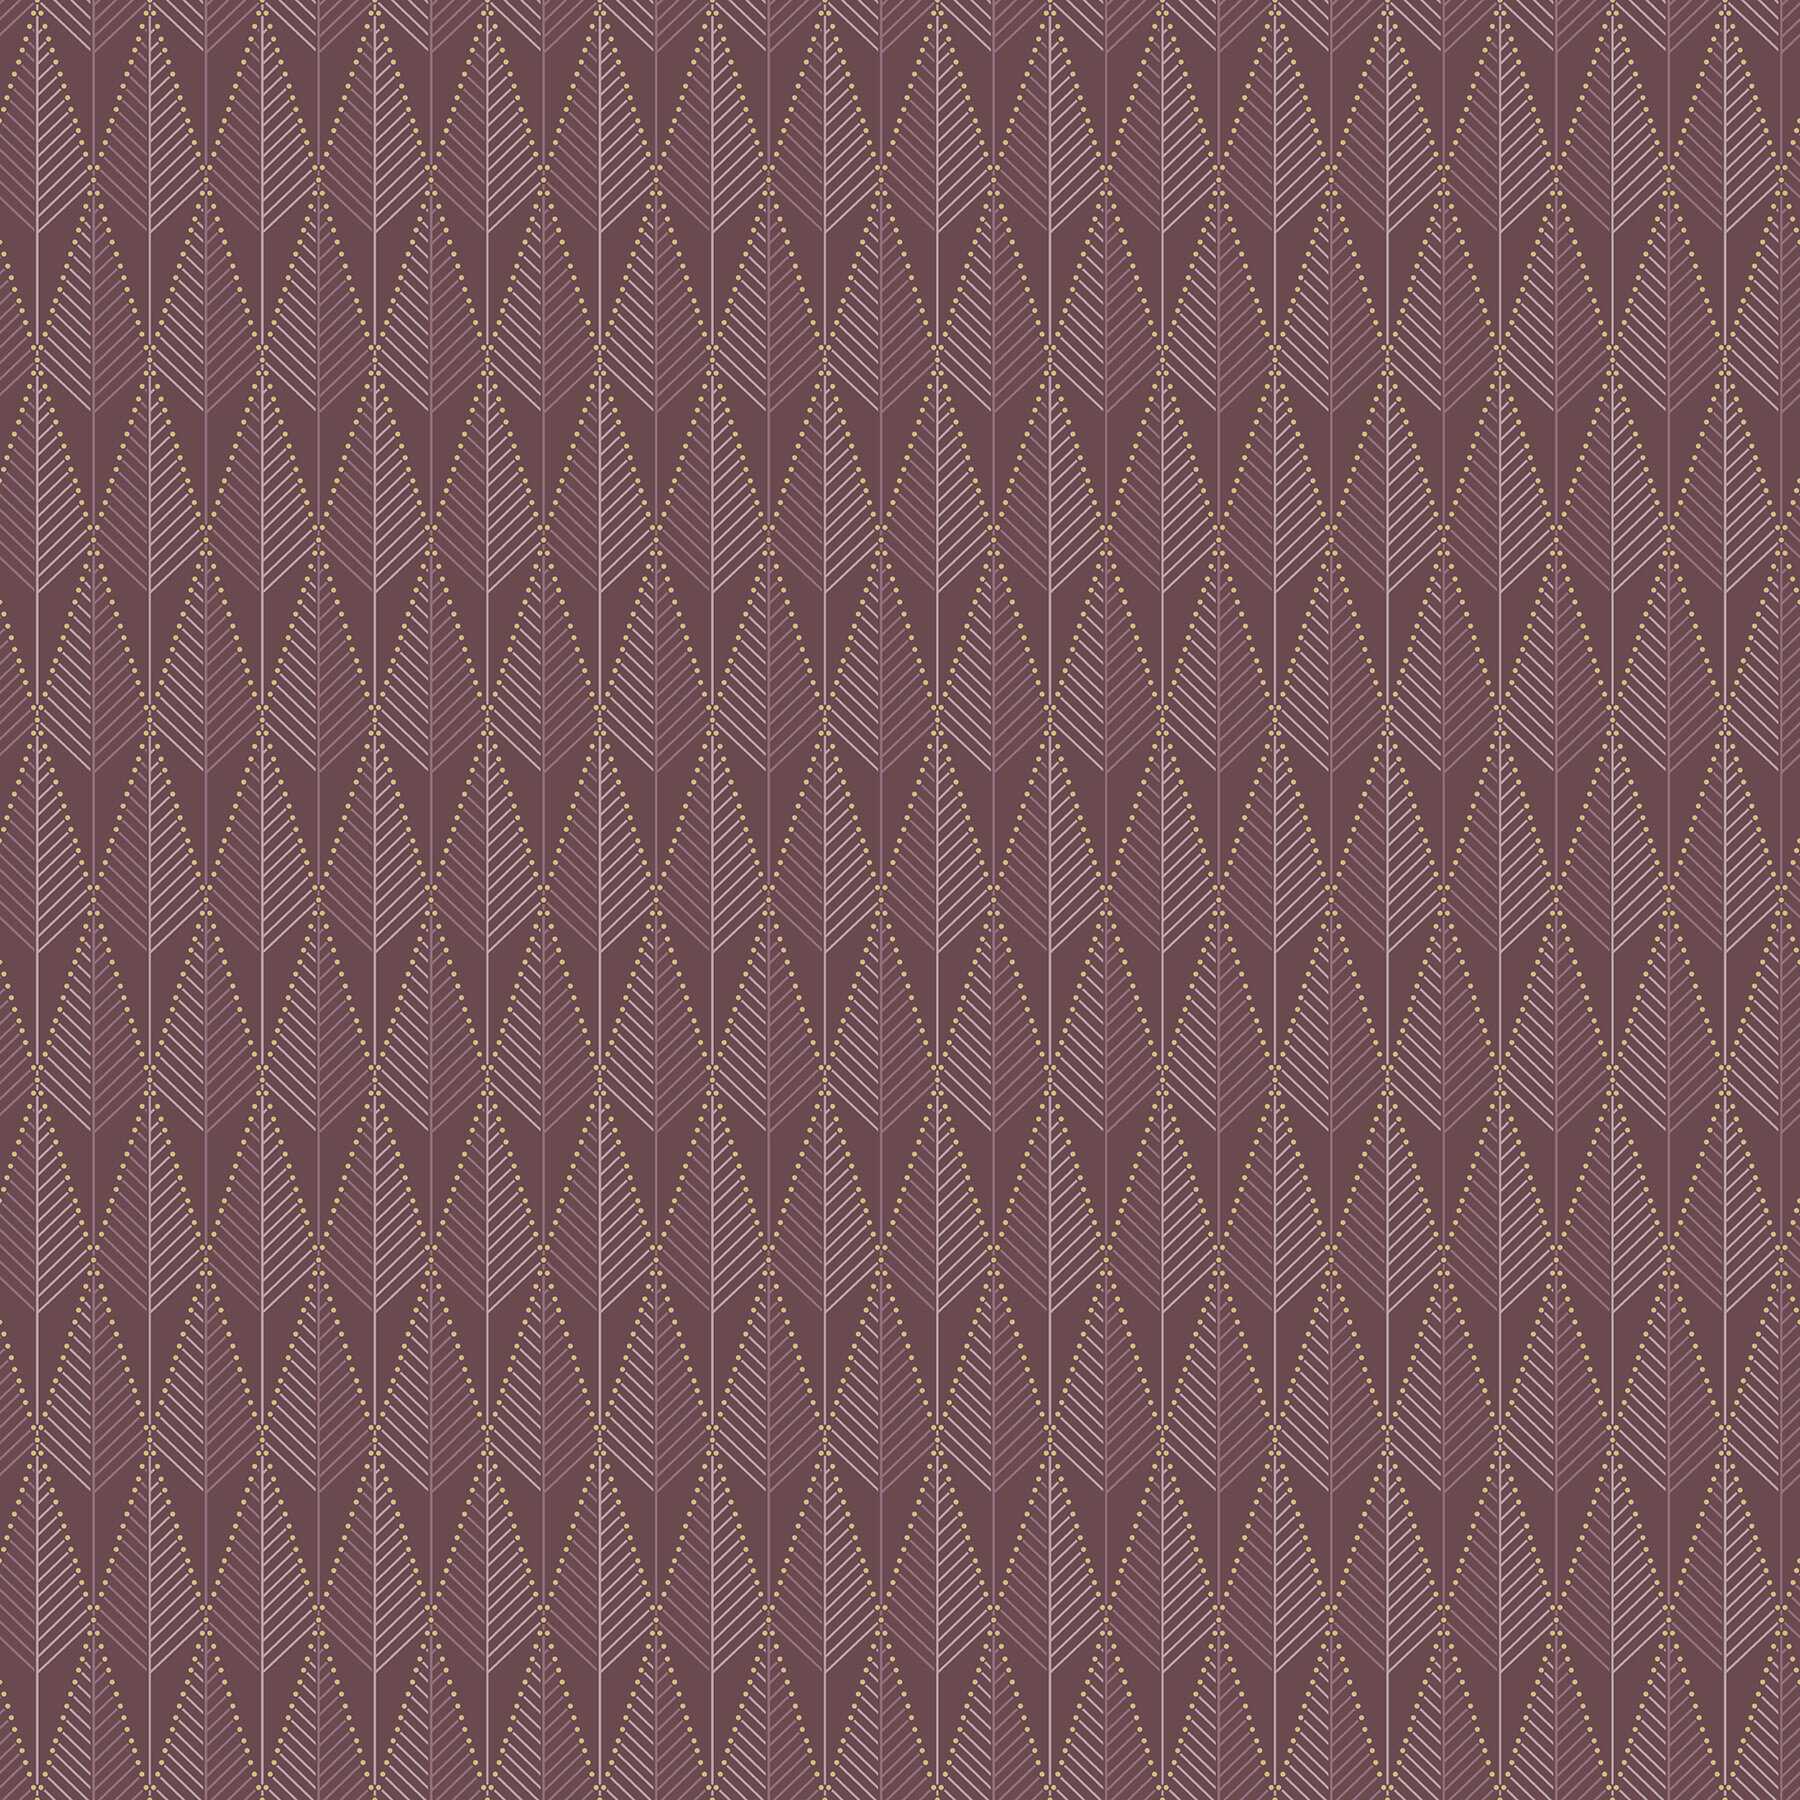 rose gold glitter wallpaper,glitter,pink,purple,violet,pattern